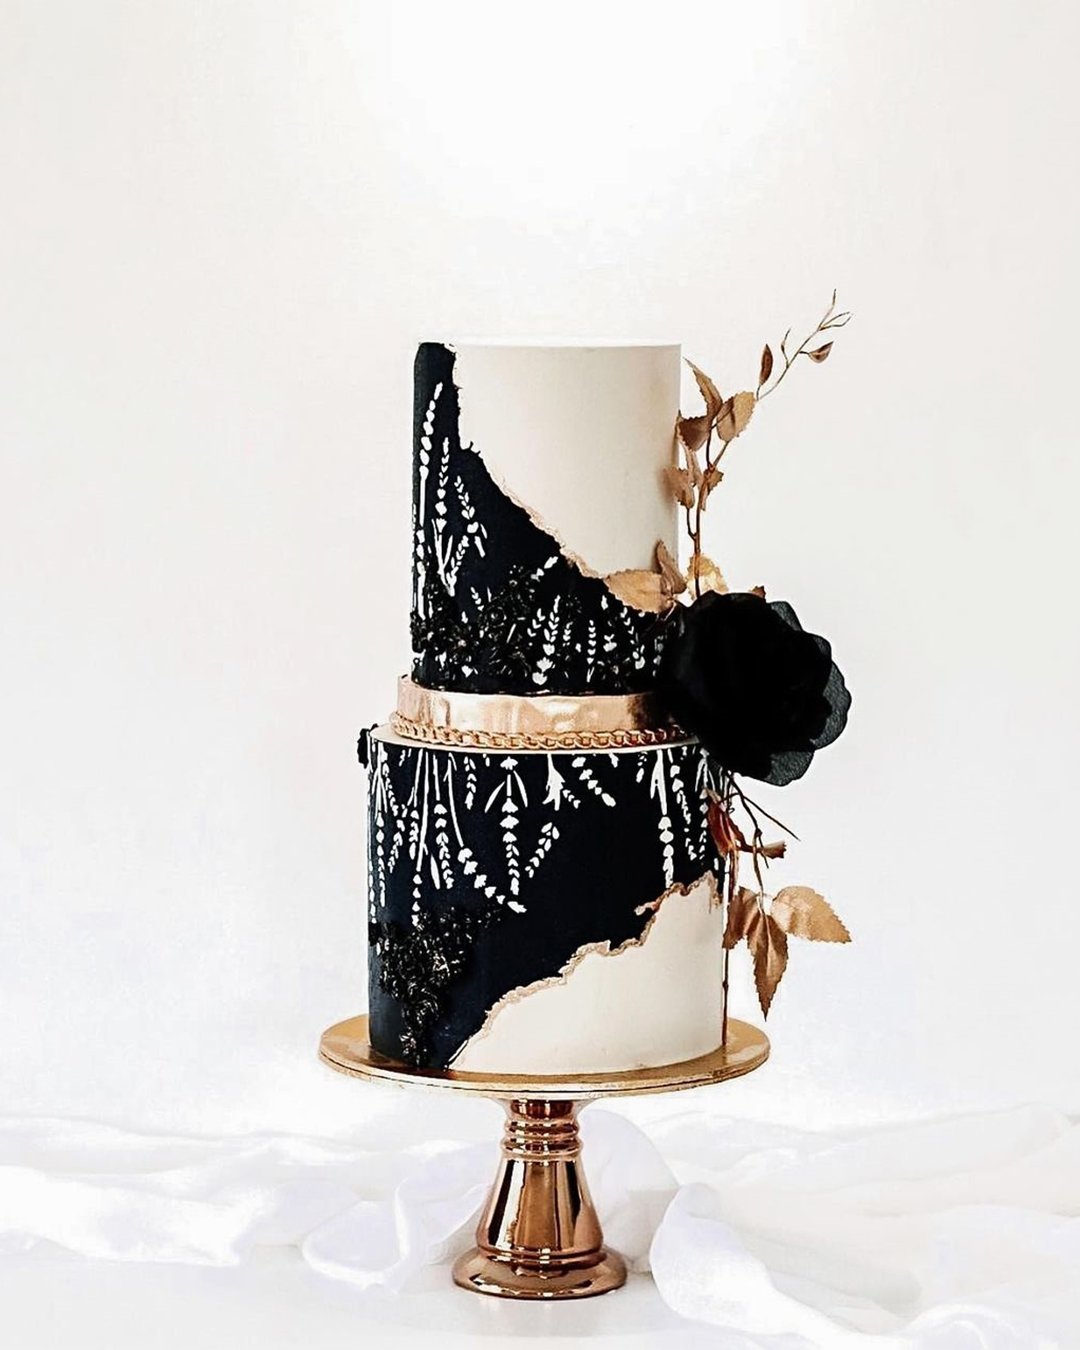 black and white wedding cakes elegant cakes gold accents